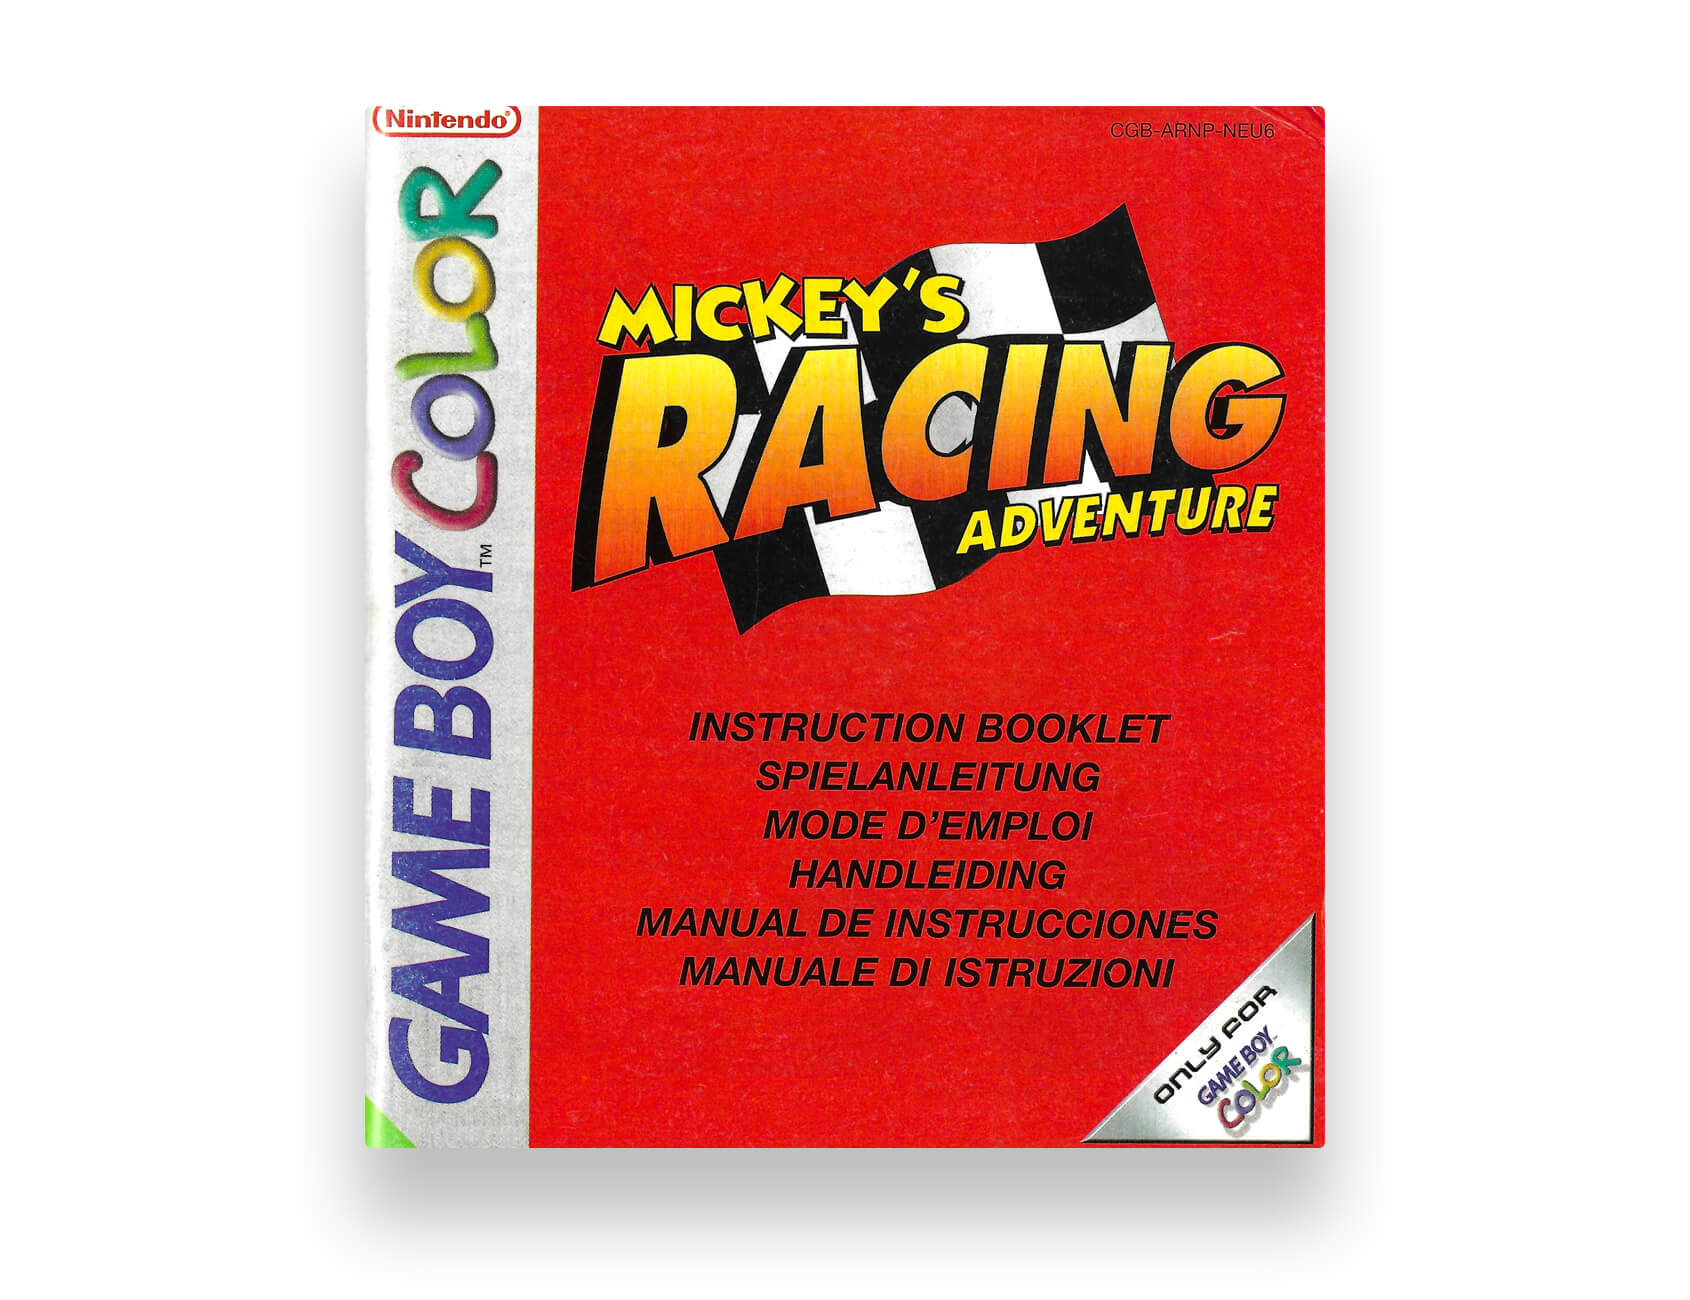 Mickey’s Racing Adventure